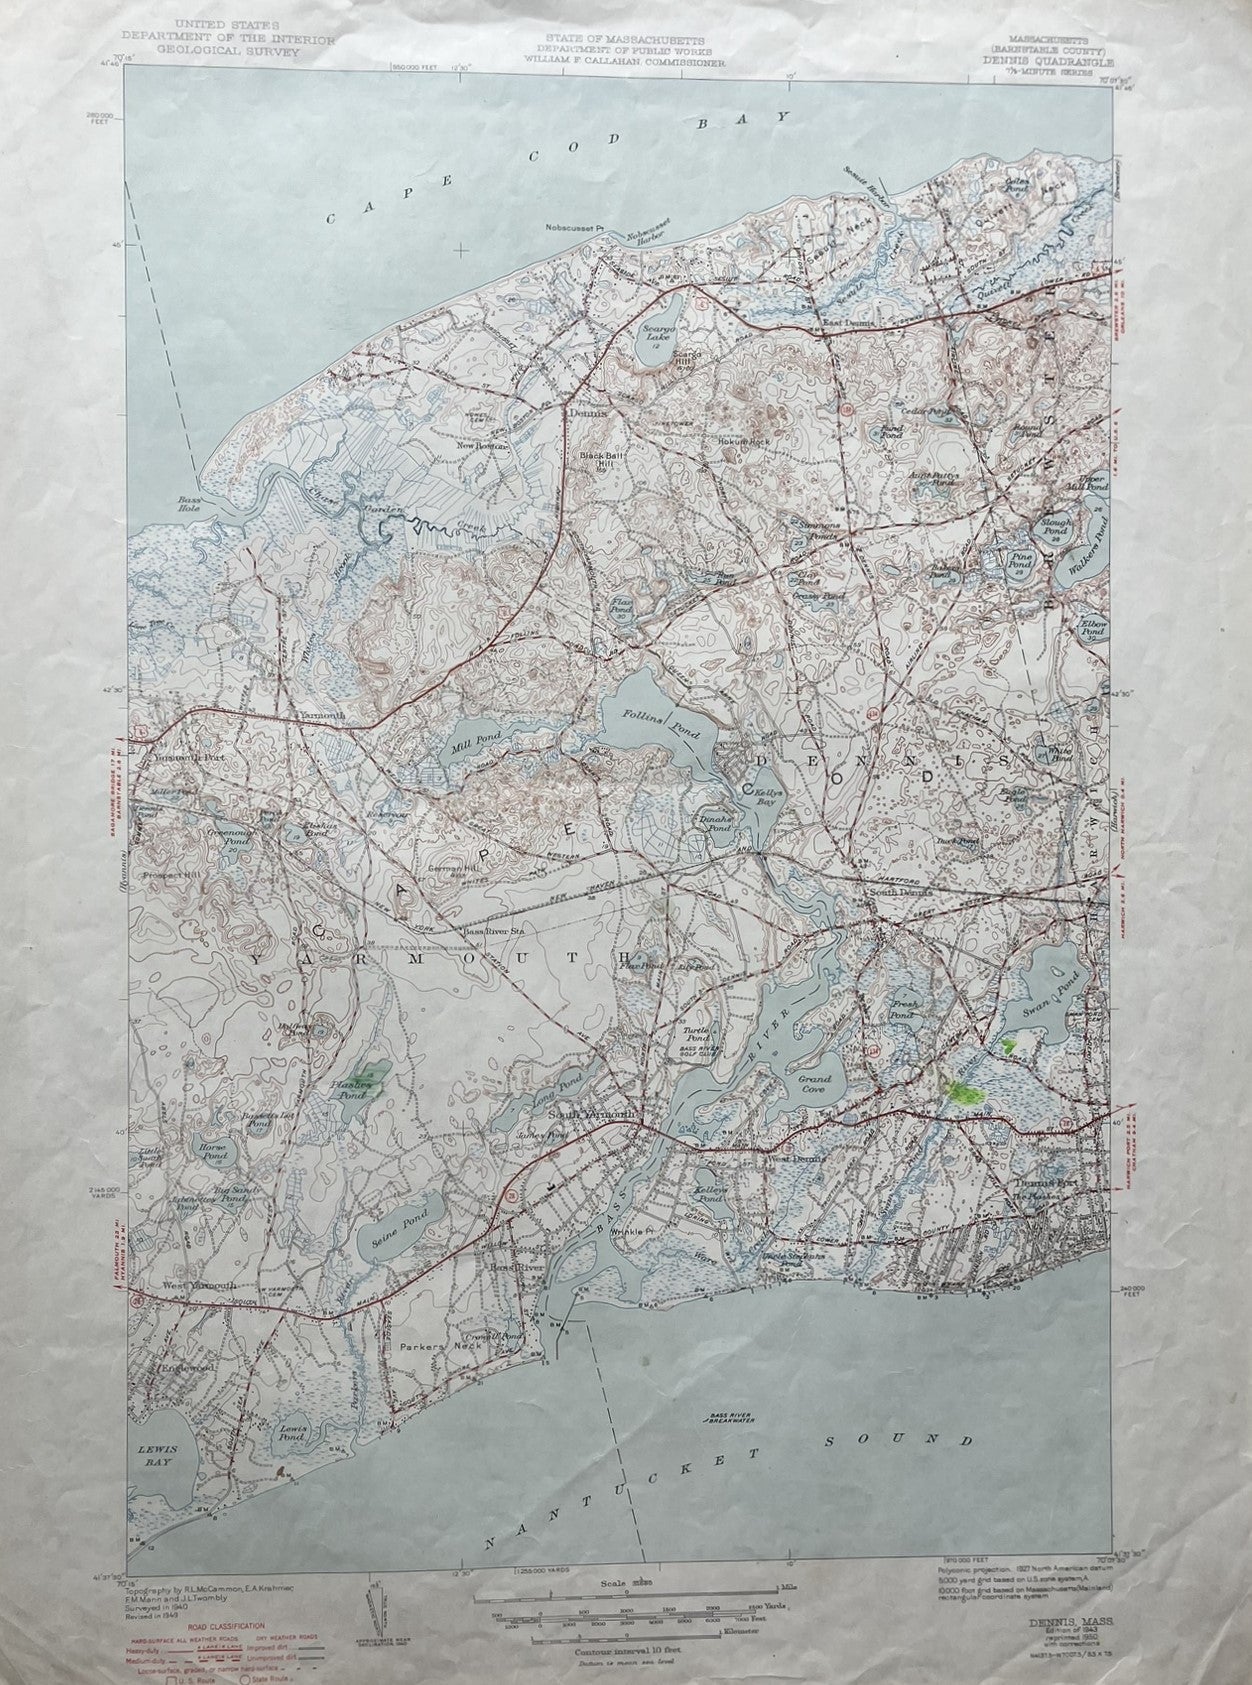 Genuine-Vintage-Map-Dennis-Mass-Cape-Cod-Antique-Topographic-Map-1950-USGS-U-S-Geological-Survey-Maps-Of-Antiquity